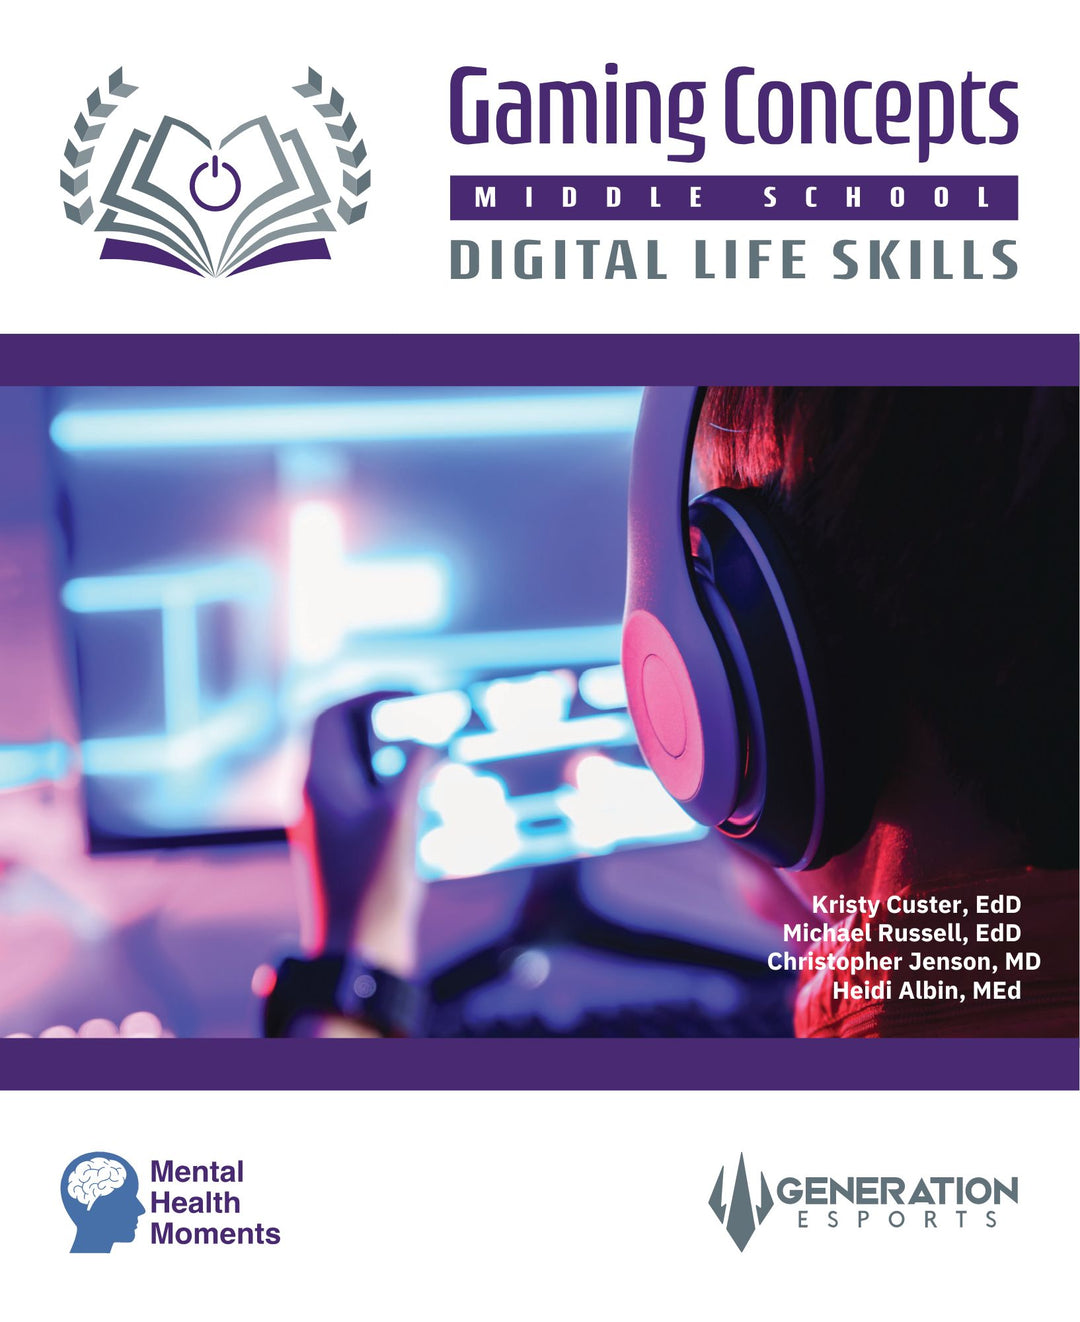 Generation Esports: Gaming Concepts - Digital Life Skills (Digital Curriculum)